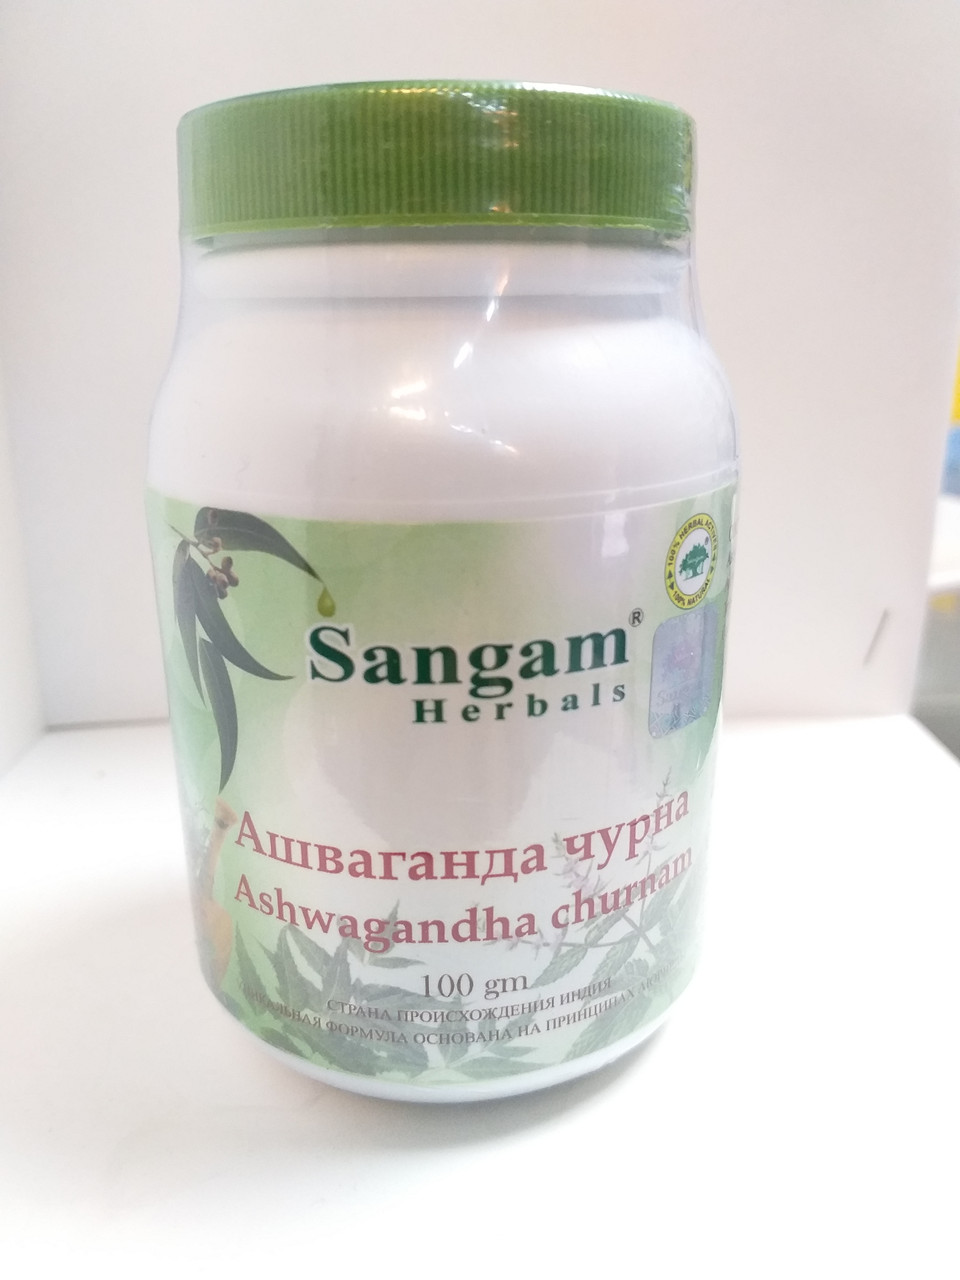 Ашваганда чурна, 100 гр, Сангам , Ashwagandha churnam, Sangam